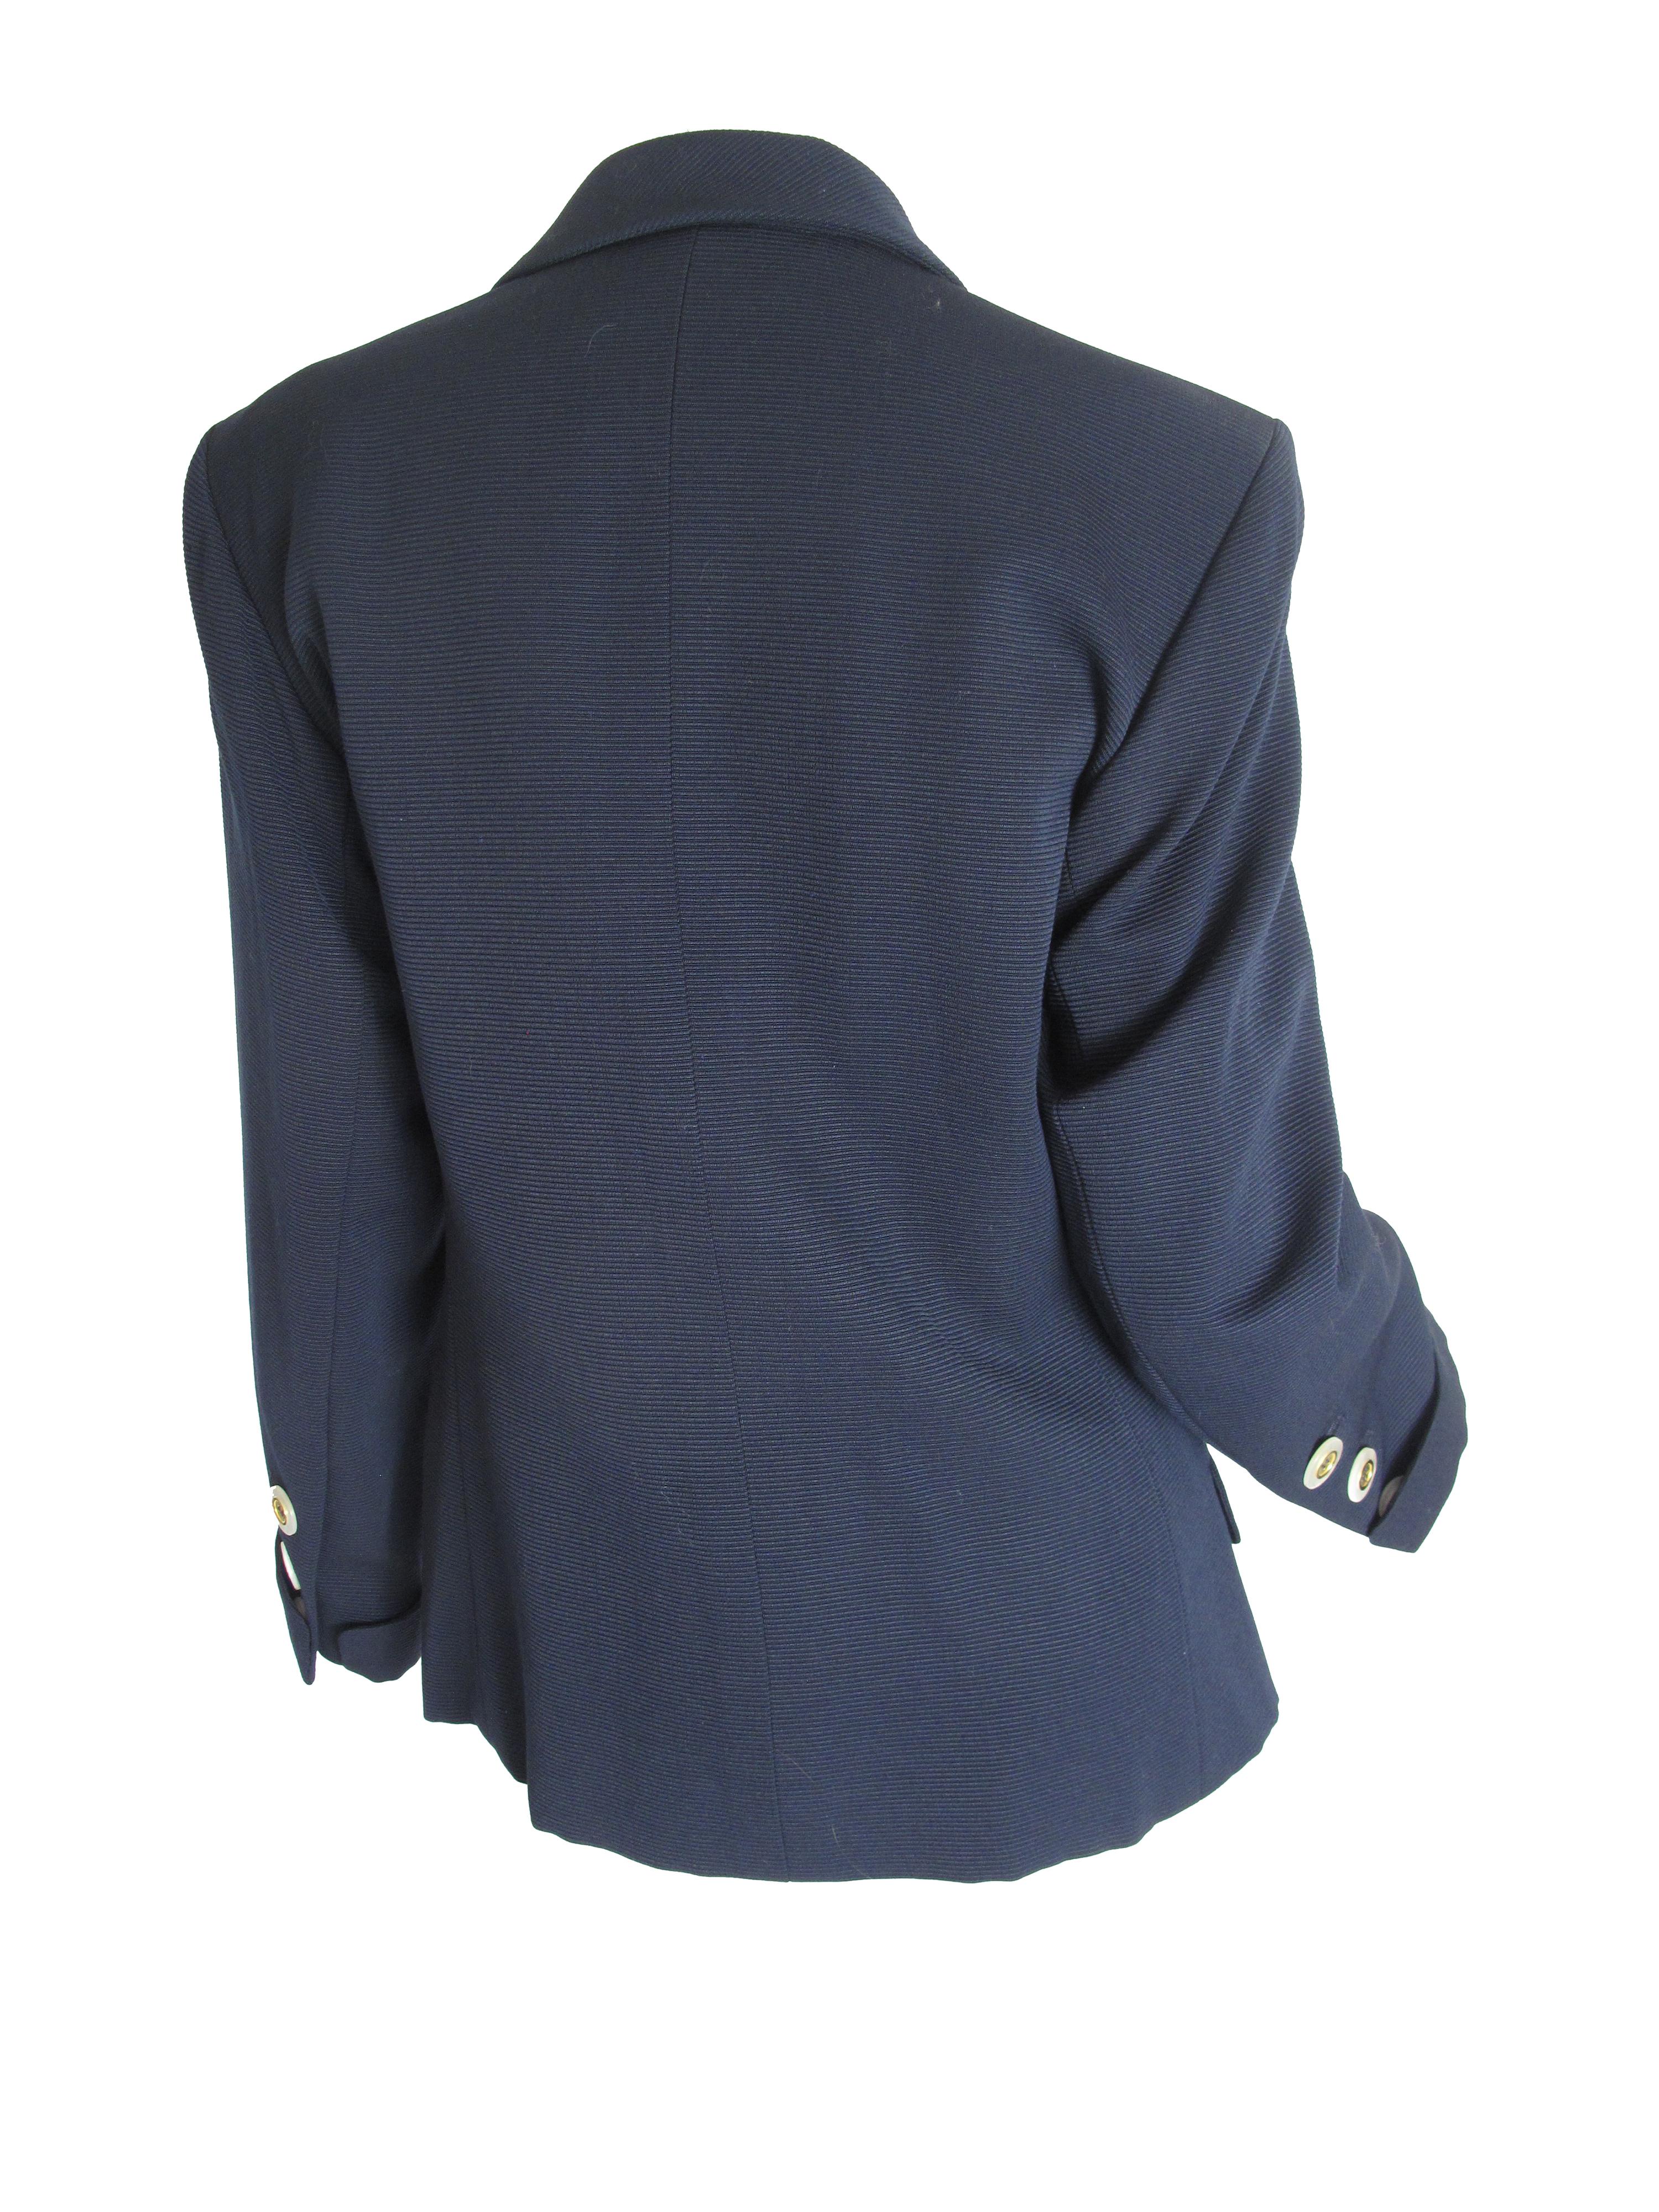 Yves Saint Laurent Rive Gauche navy blazer. Condition: Very good. size 38